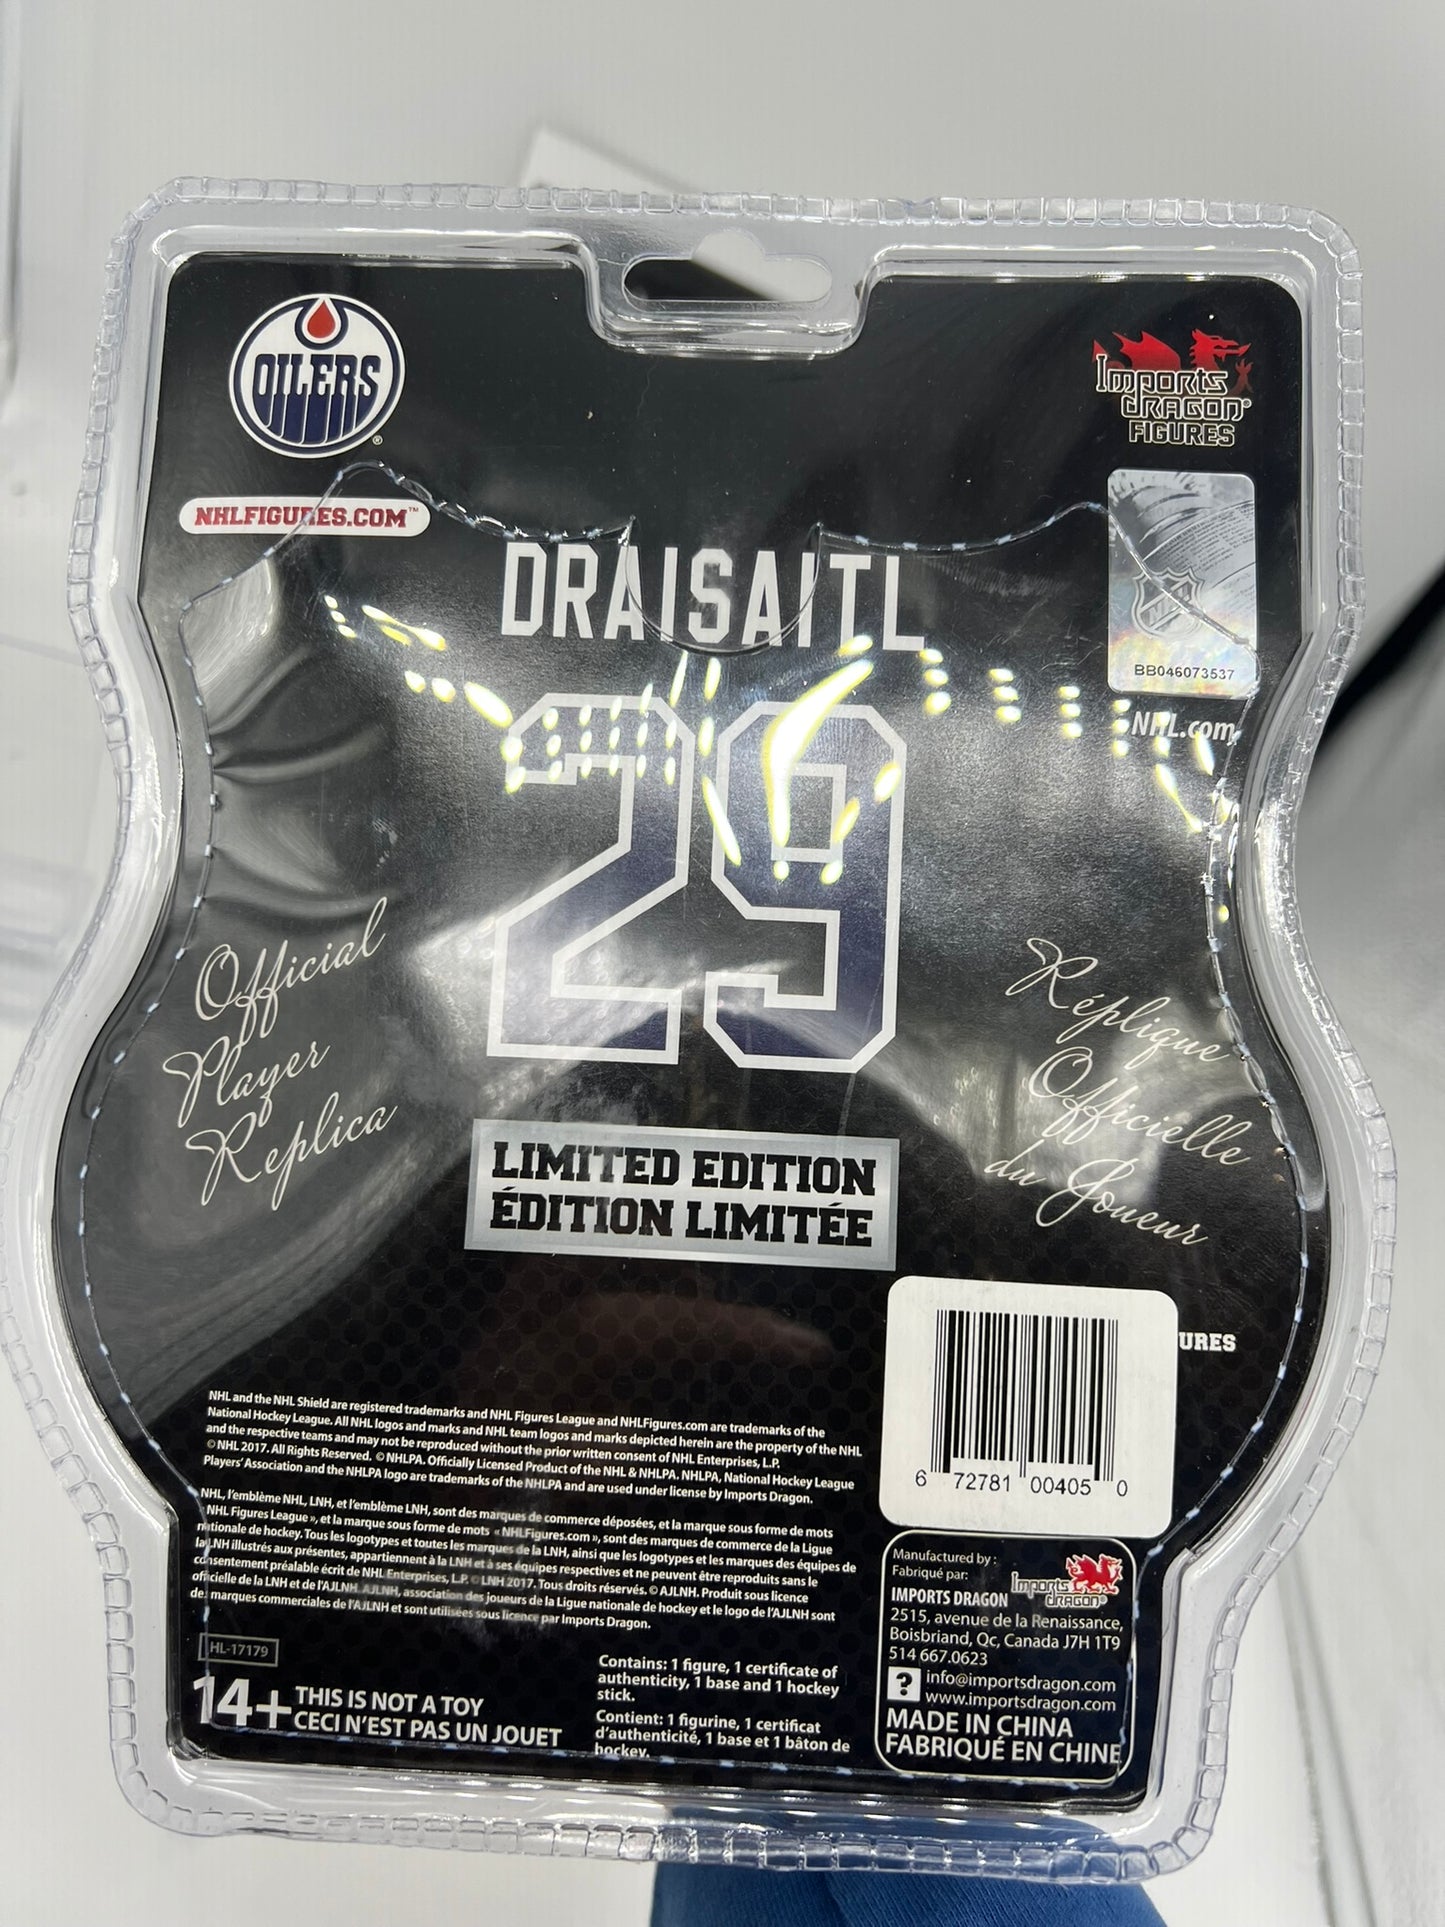 Leon Draisaitl Draft 2017 limited edition NHL figure - New